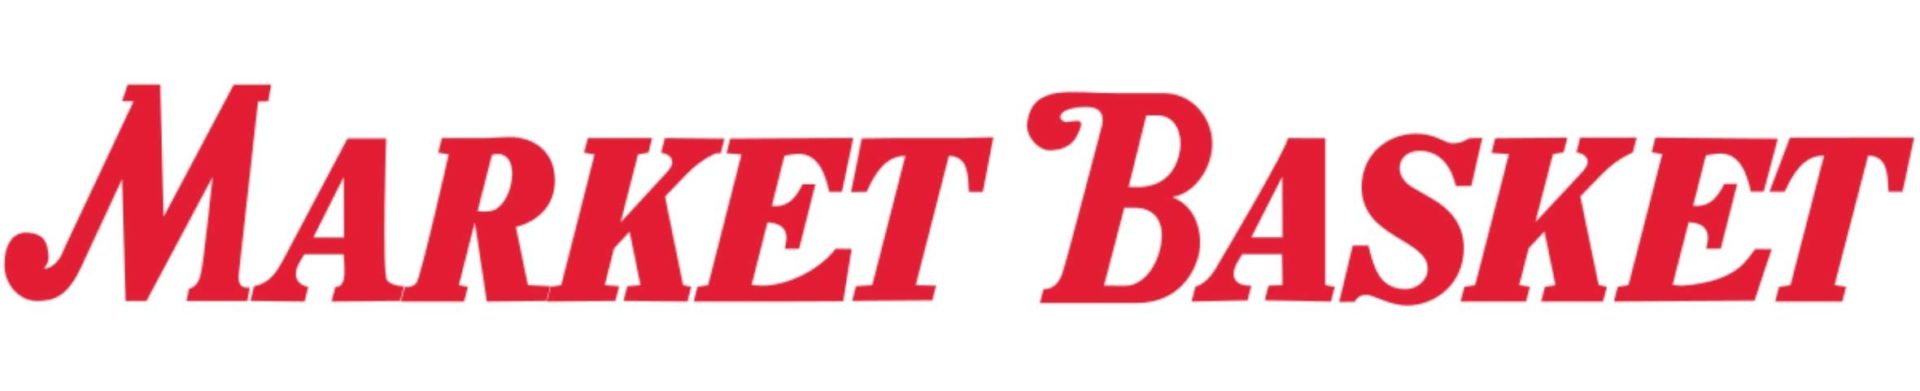 the Market Basket logo